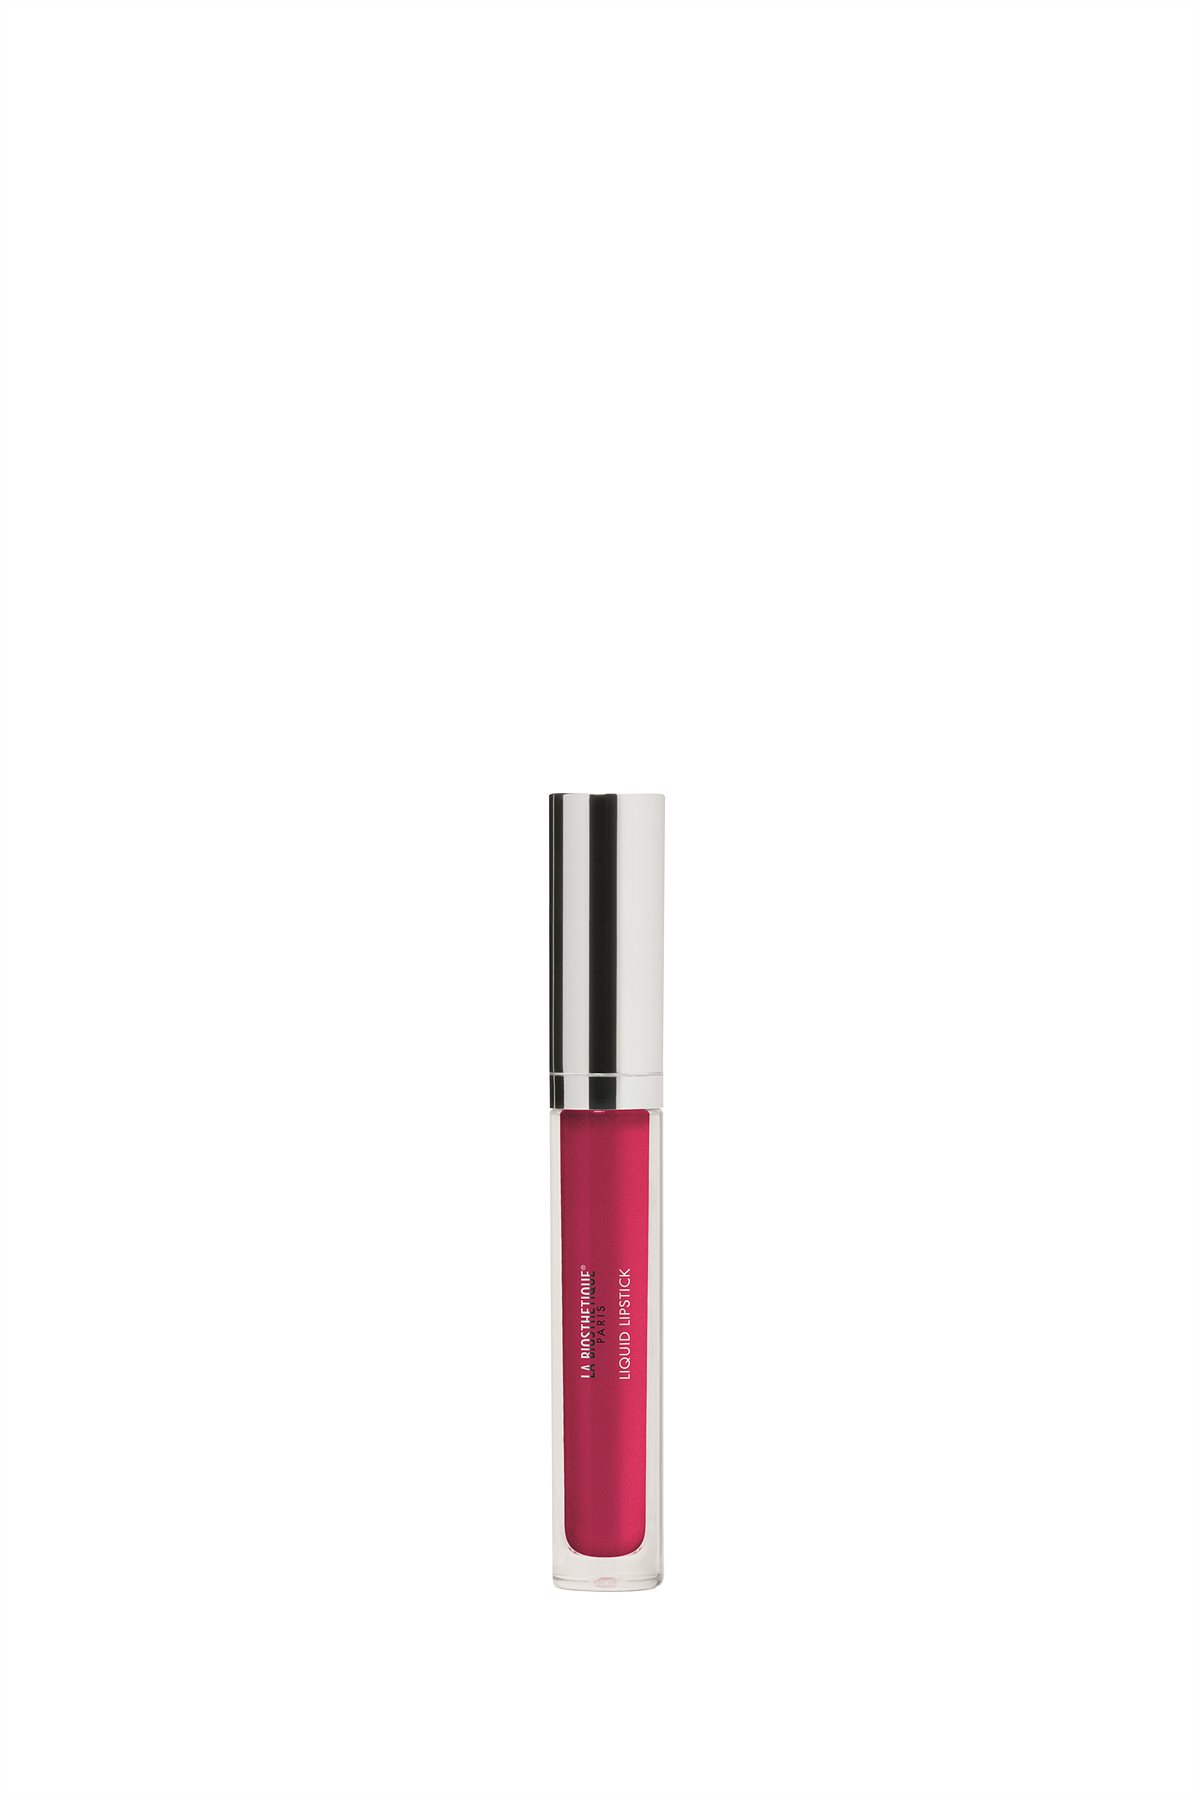 La Biosthétique_liquid lipstick_sweet_raspberry_EUR 22,00